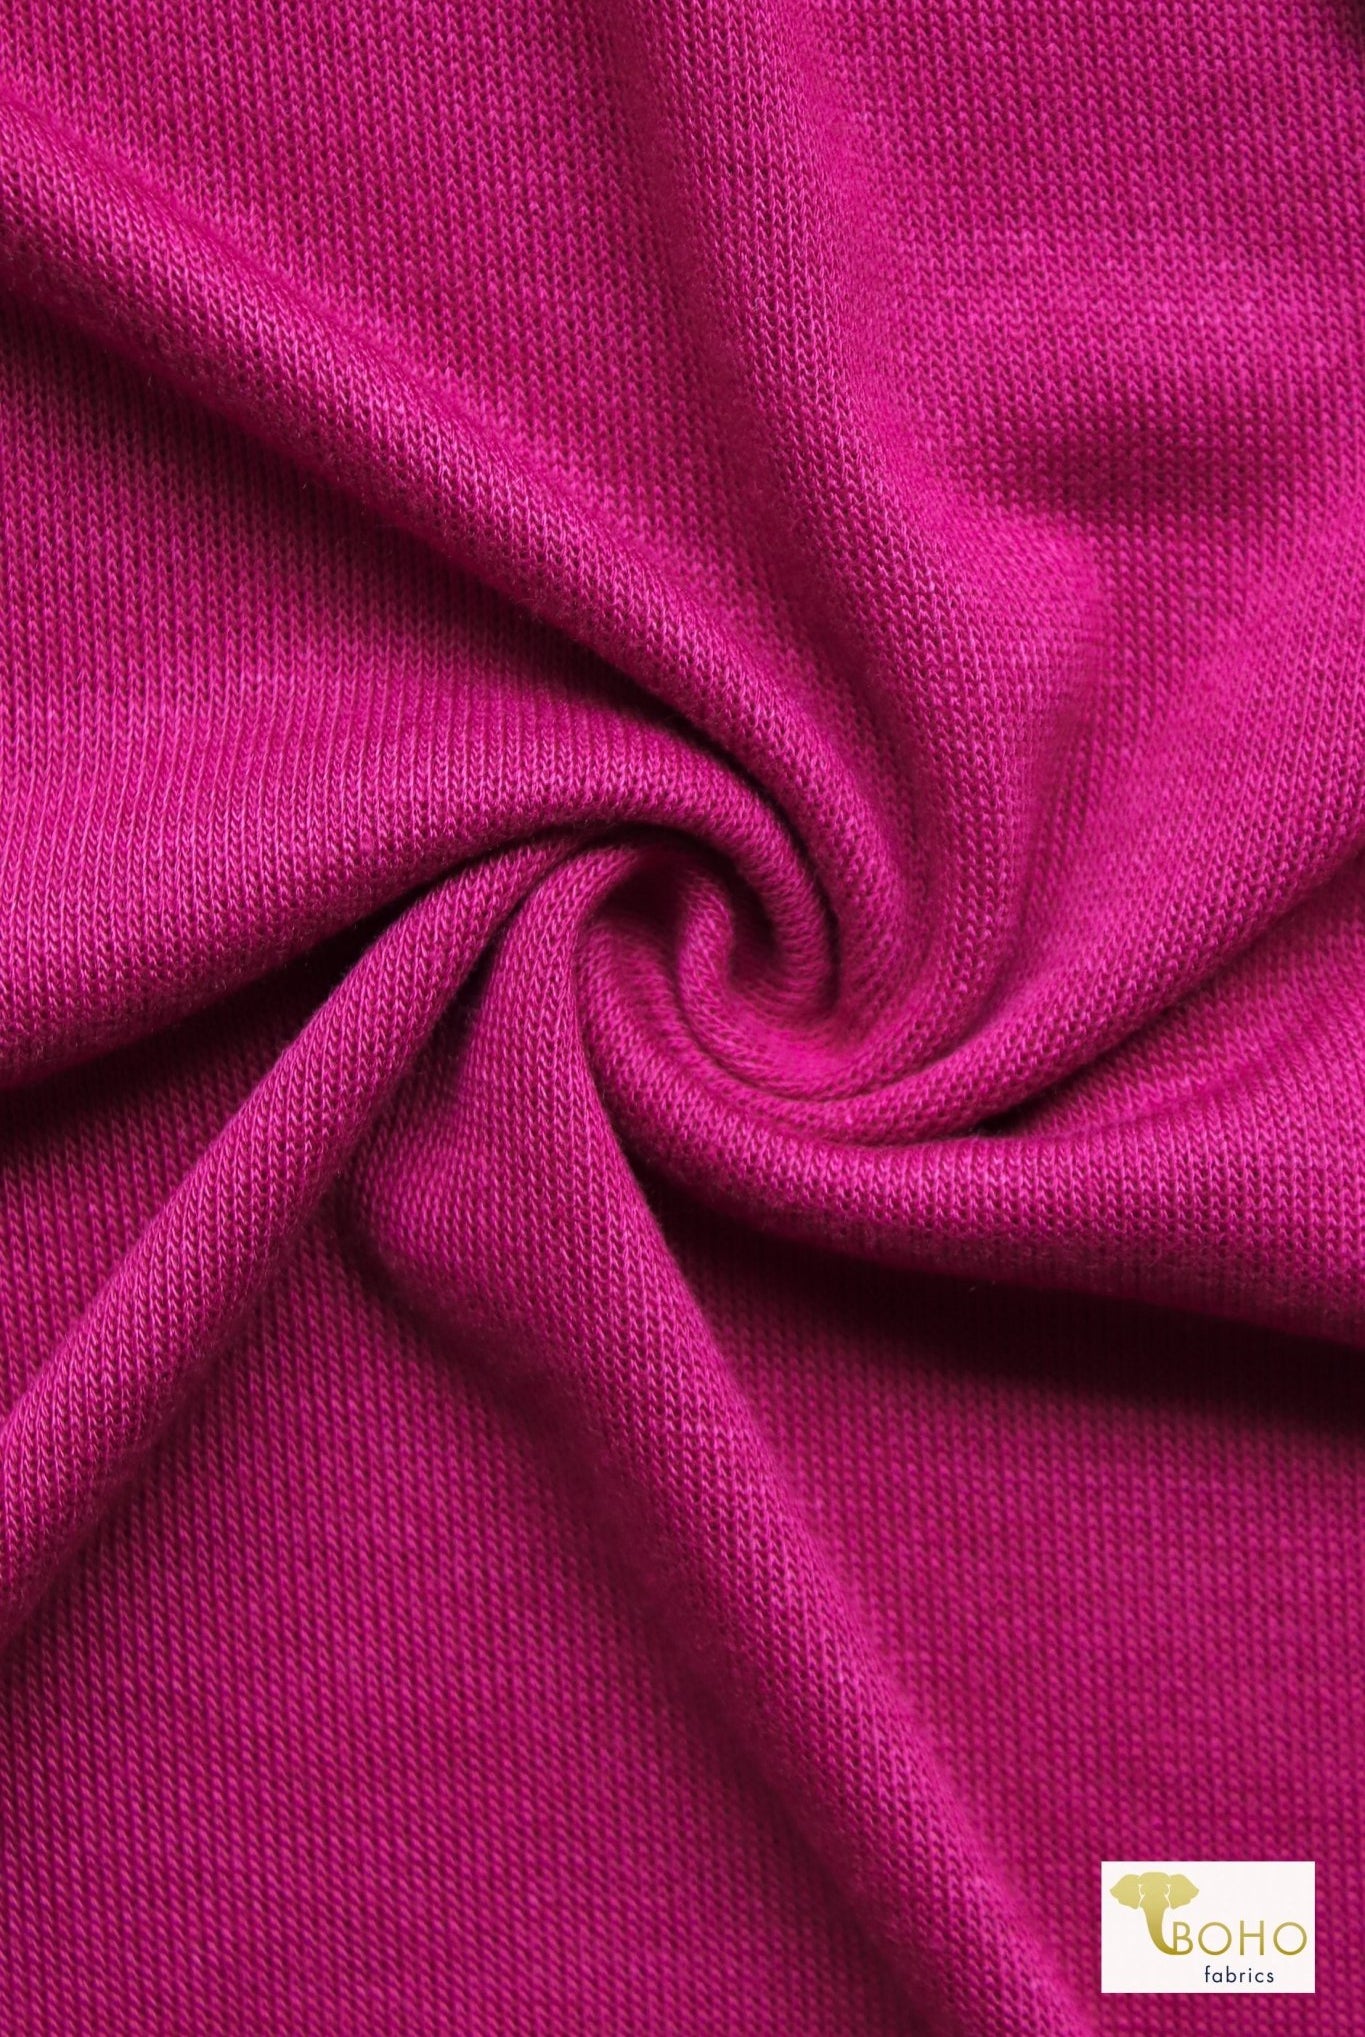 Bright Raspberry, Hacci Sweater Knit - Boho Fabrics